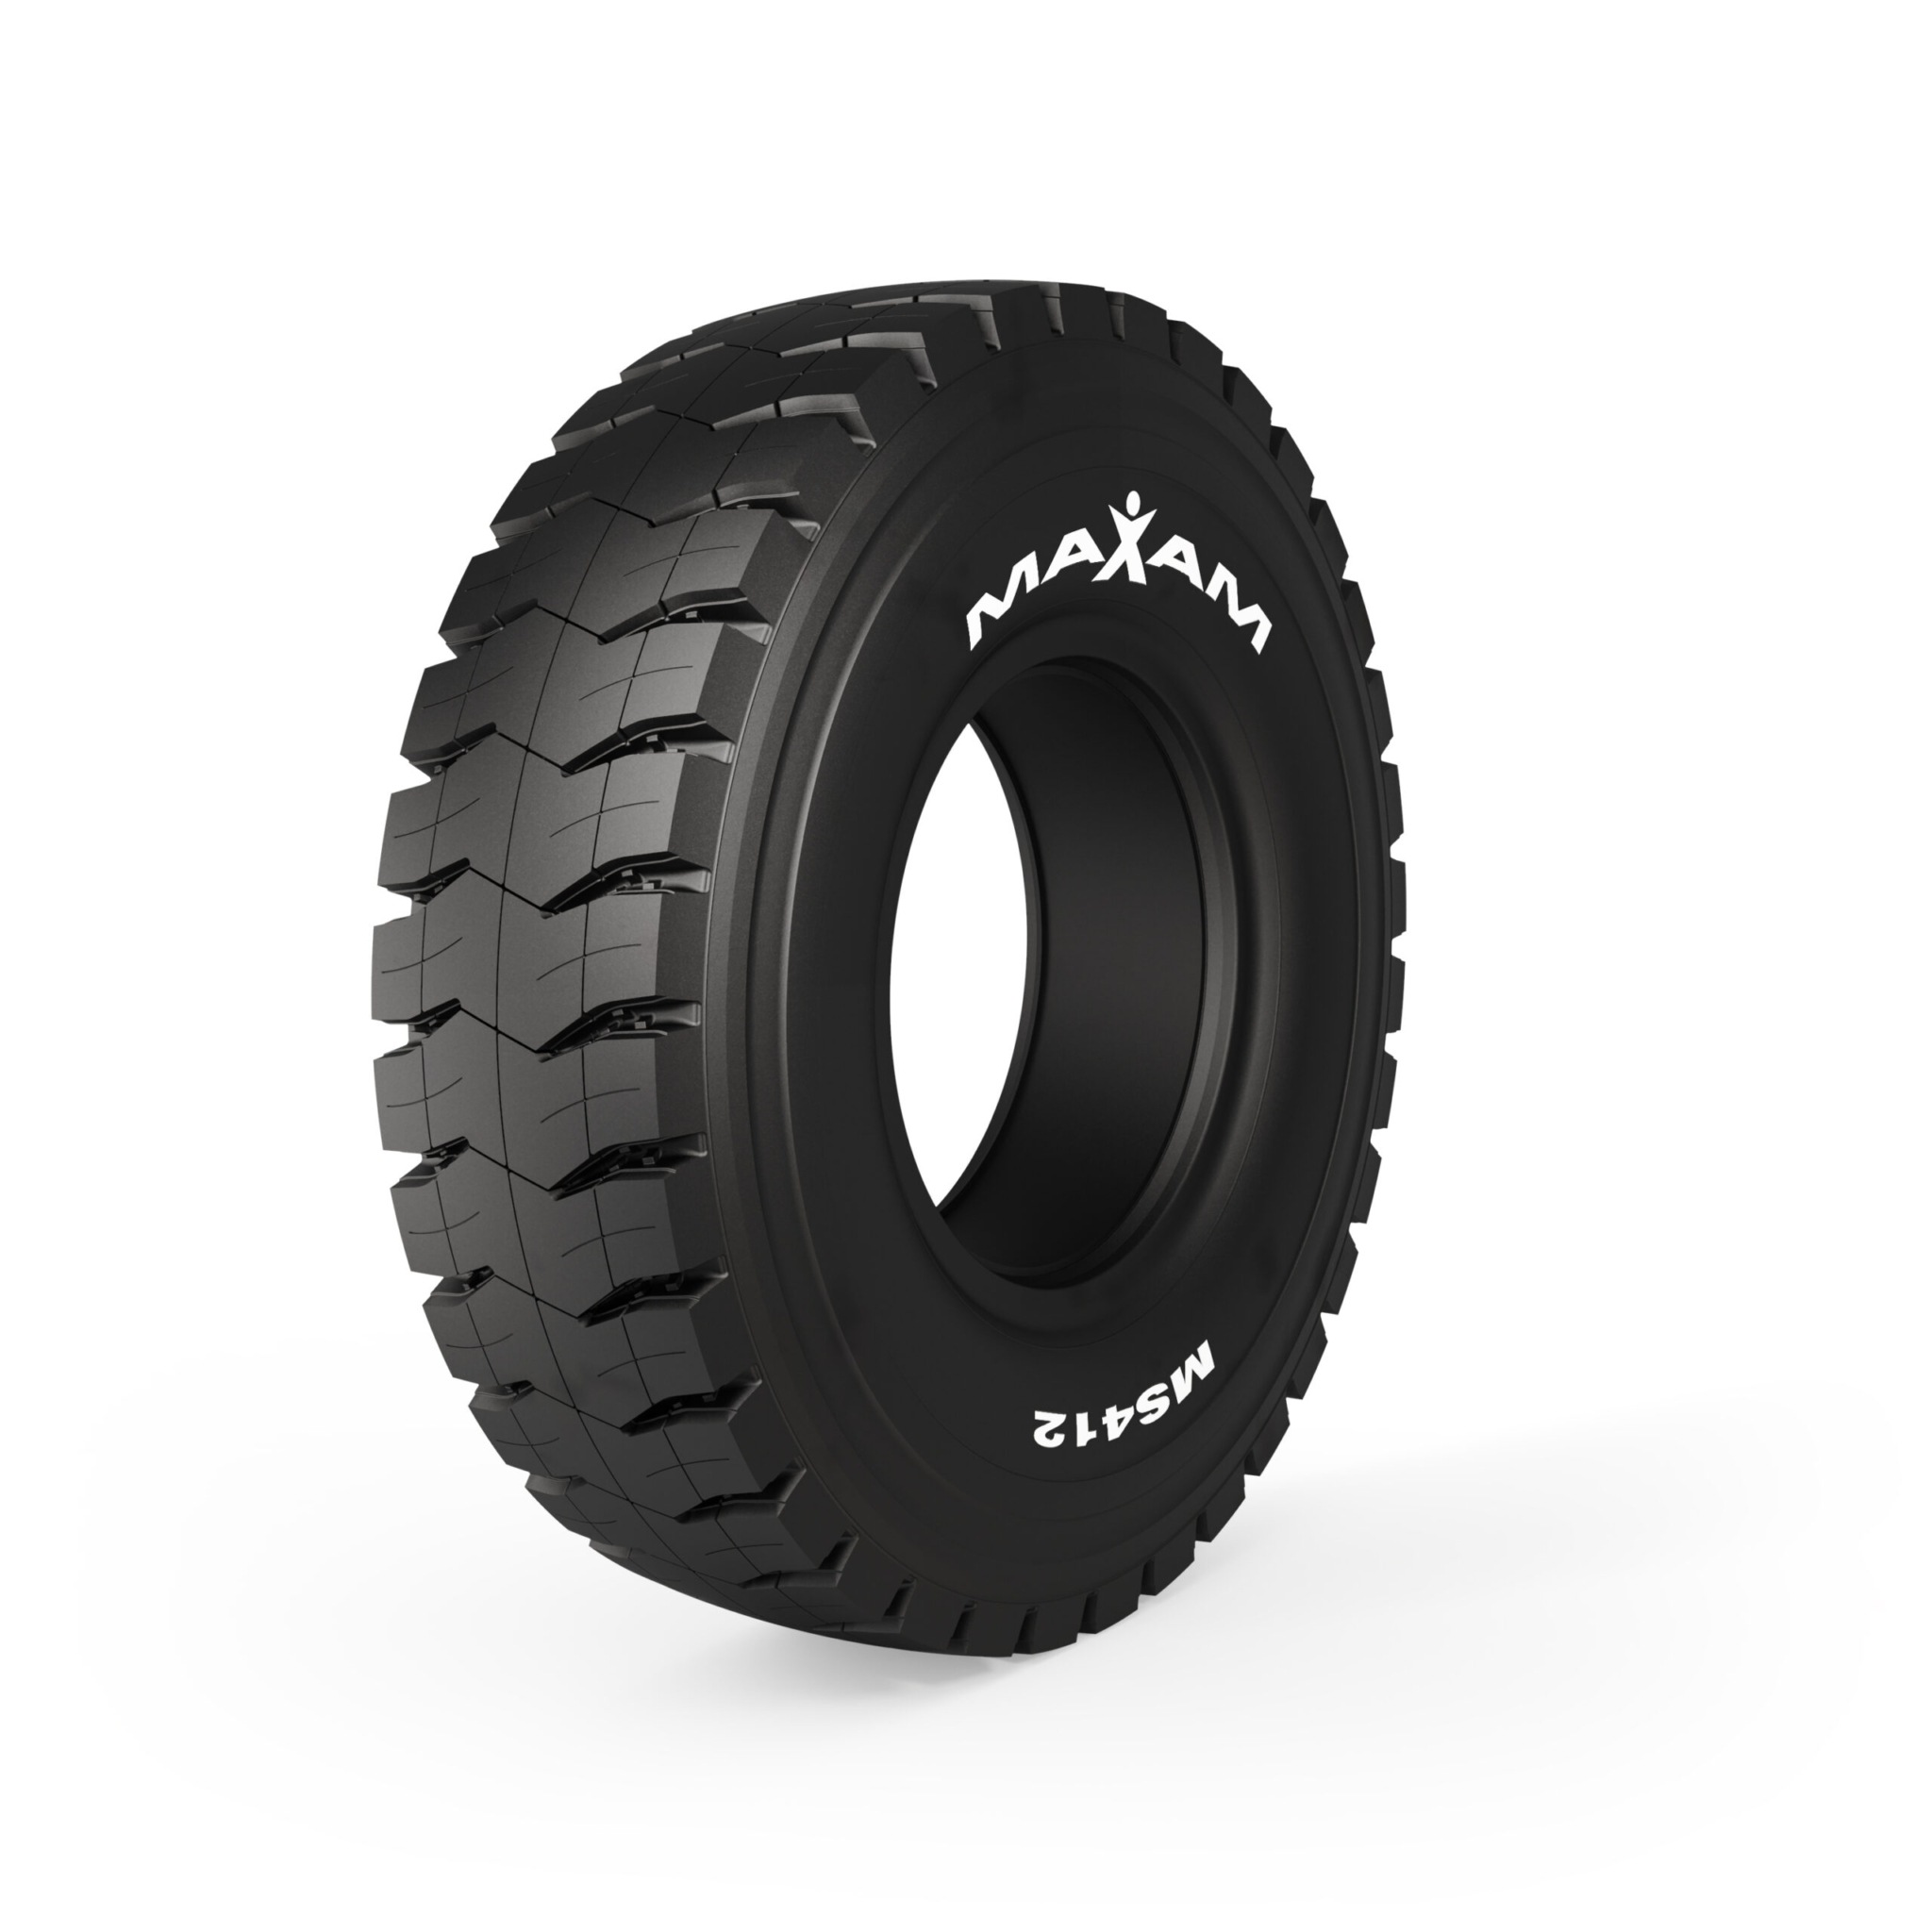 Maxam launches new mining haulage tyre